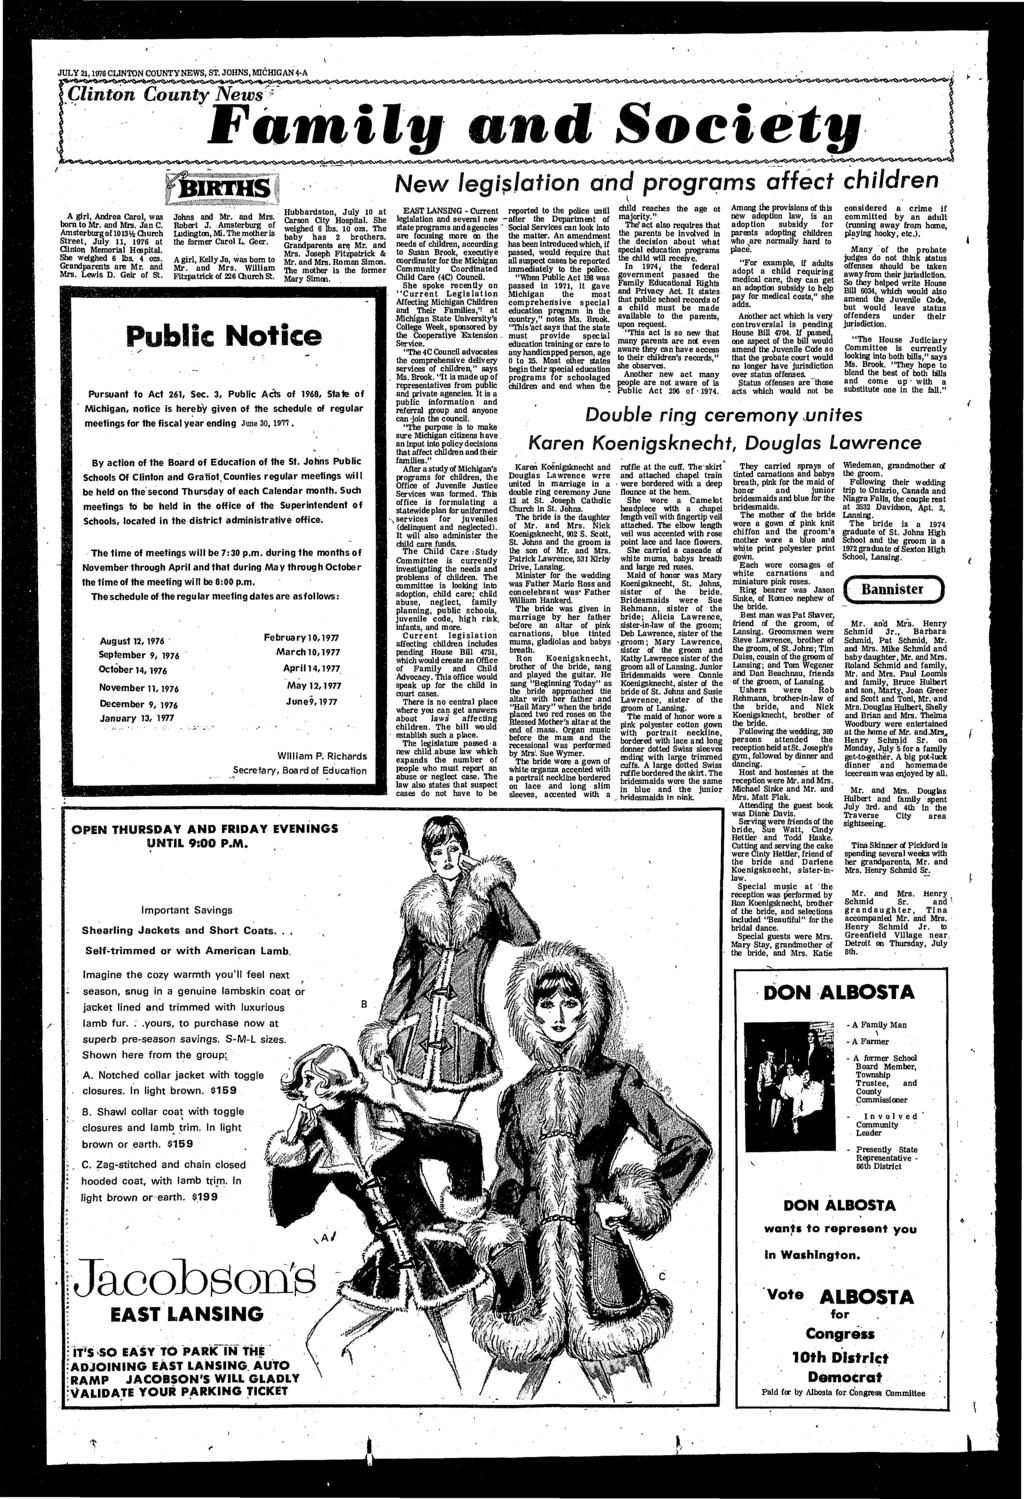 JULY 21,1976 CUNTON COUNTY NEWS, ST, JOHNS, MICHIGAN 4-A [Clnton News A grl, Andrea Carol, was born to Mr, and Mrs. Jan C. Amsterburg of 1013% Church Street, July 11, 1976 at Clnton Memoral Hosptal.